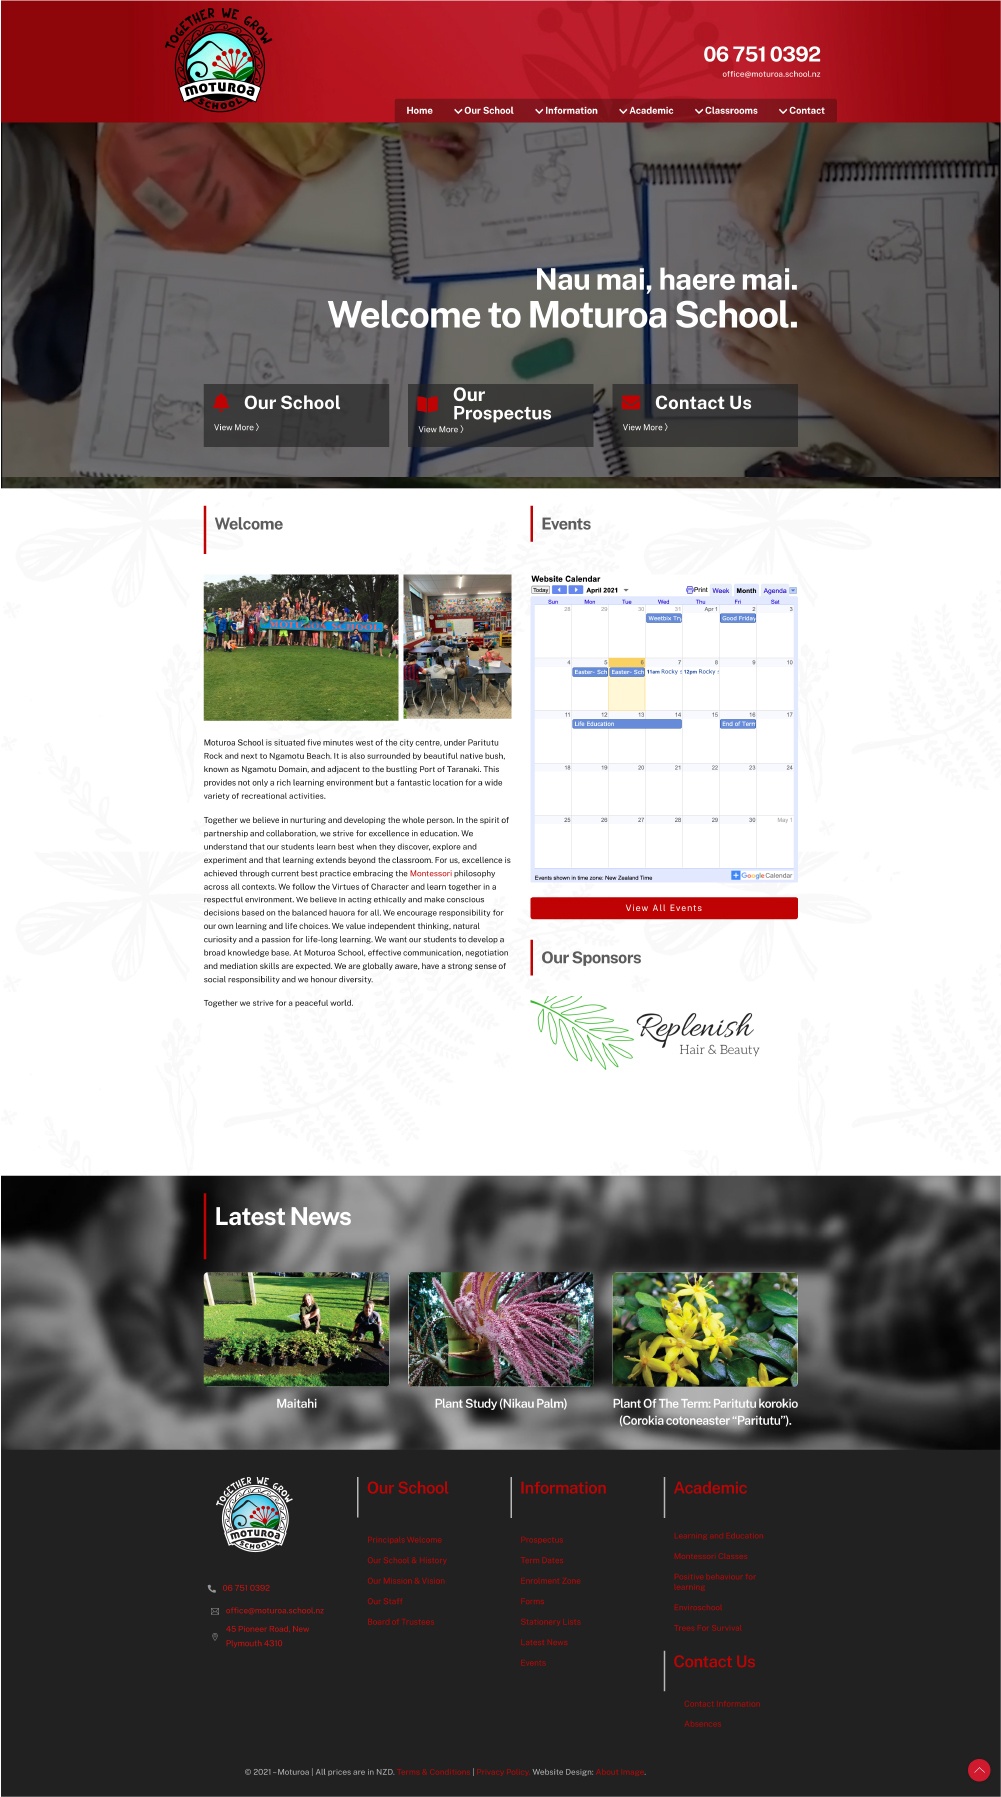 Motorua School Home Page